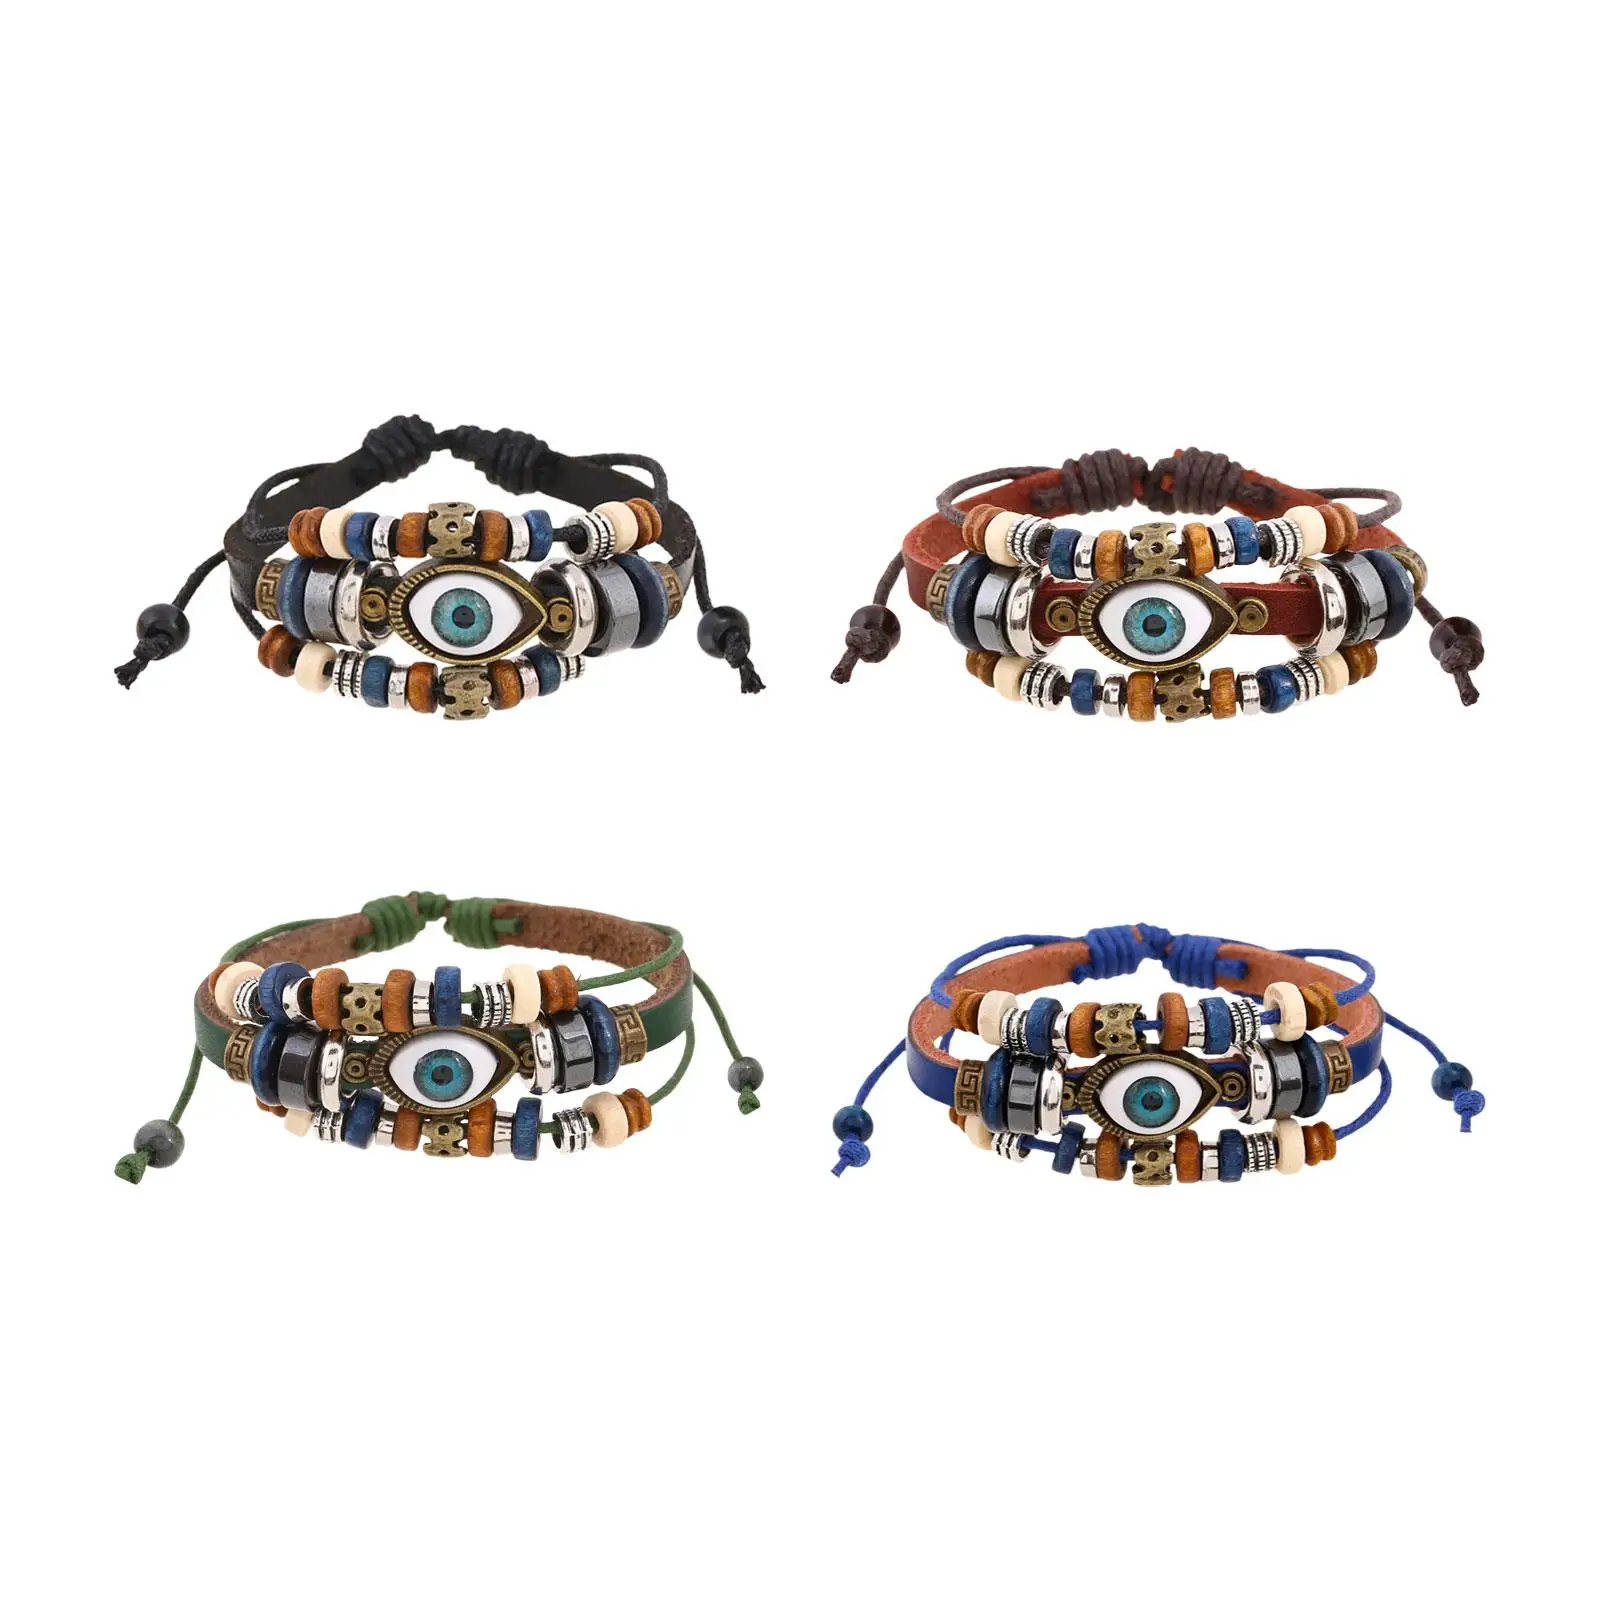 Multilayer PU Leather Bracelet Gifts Adjustable Length Wrist Cuff Bangle Vintage Style Beaded Cuff Wrap Bracelet for Men Women